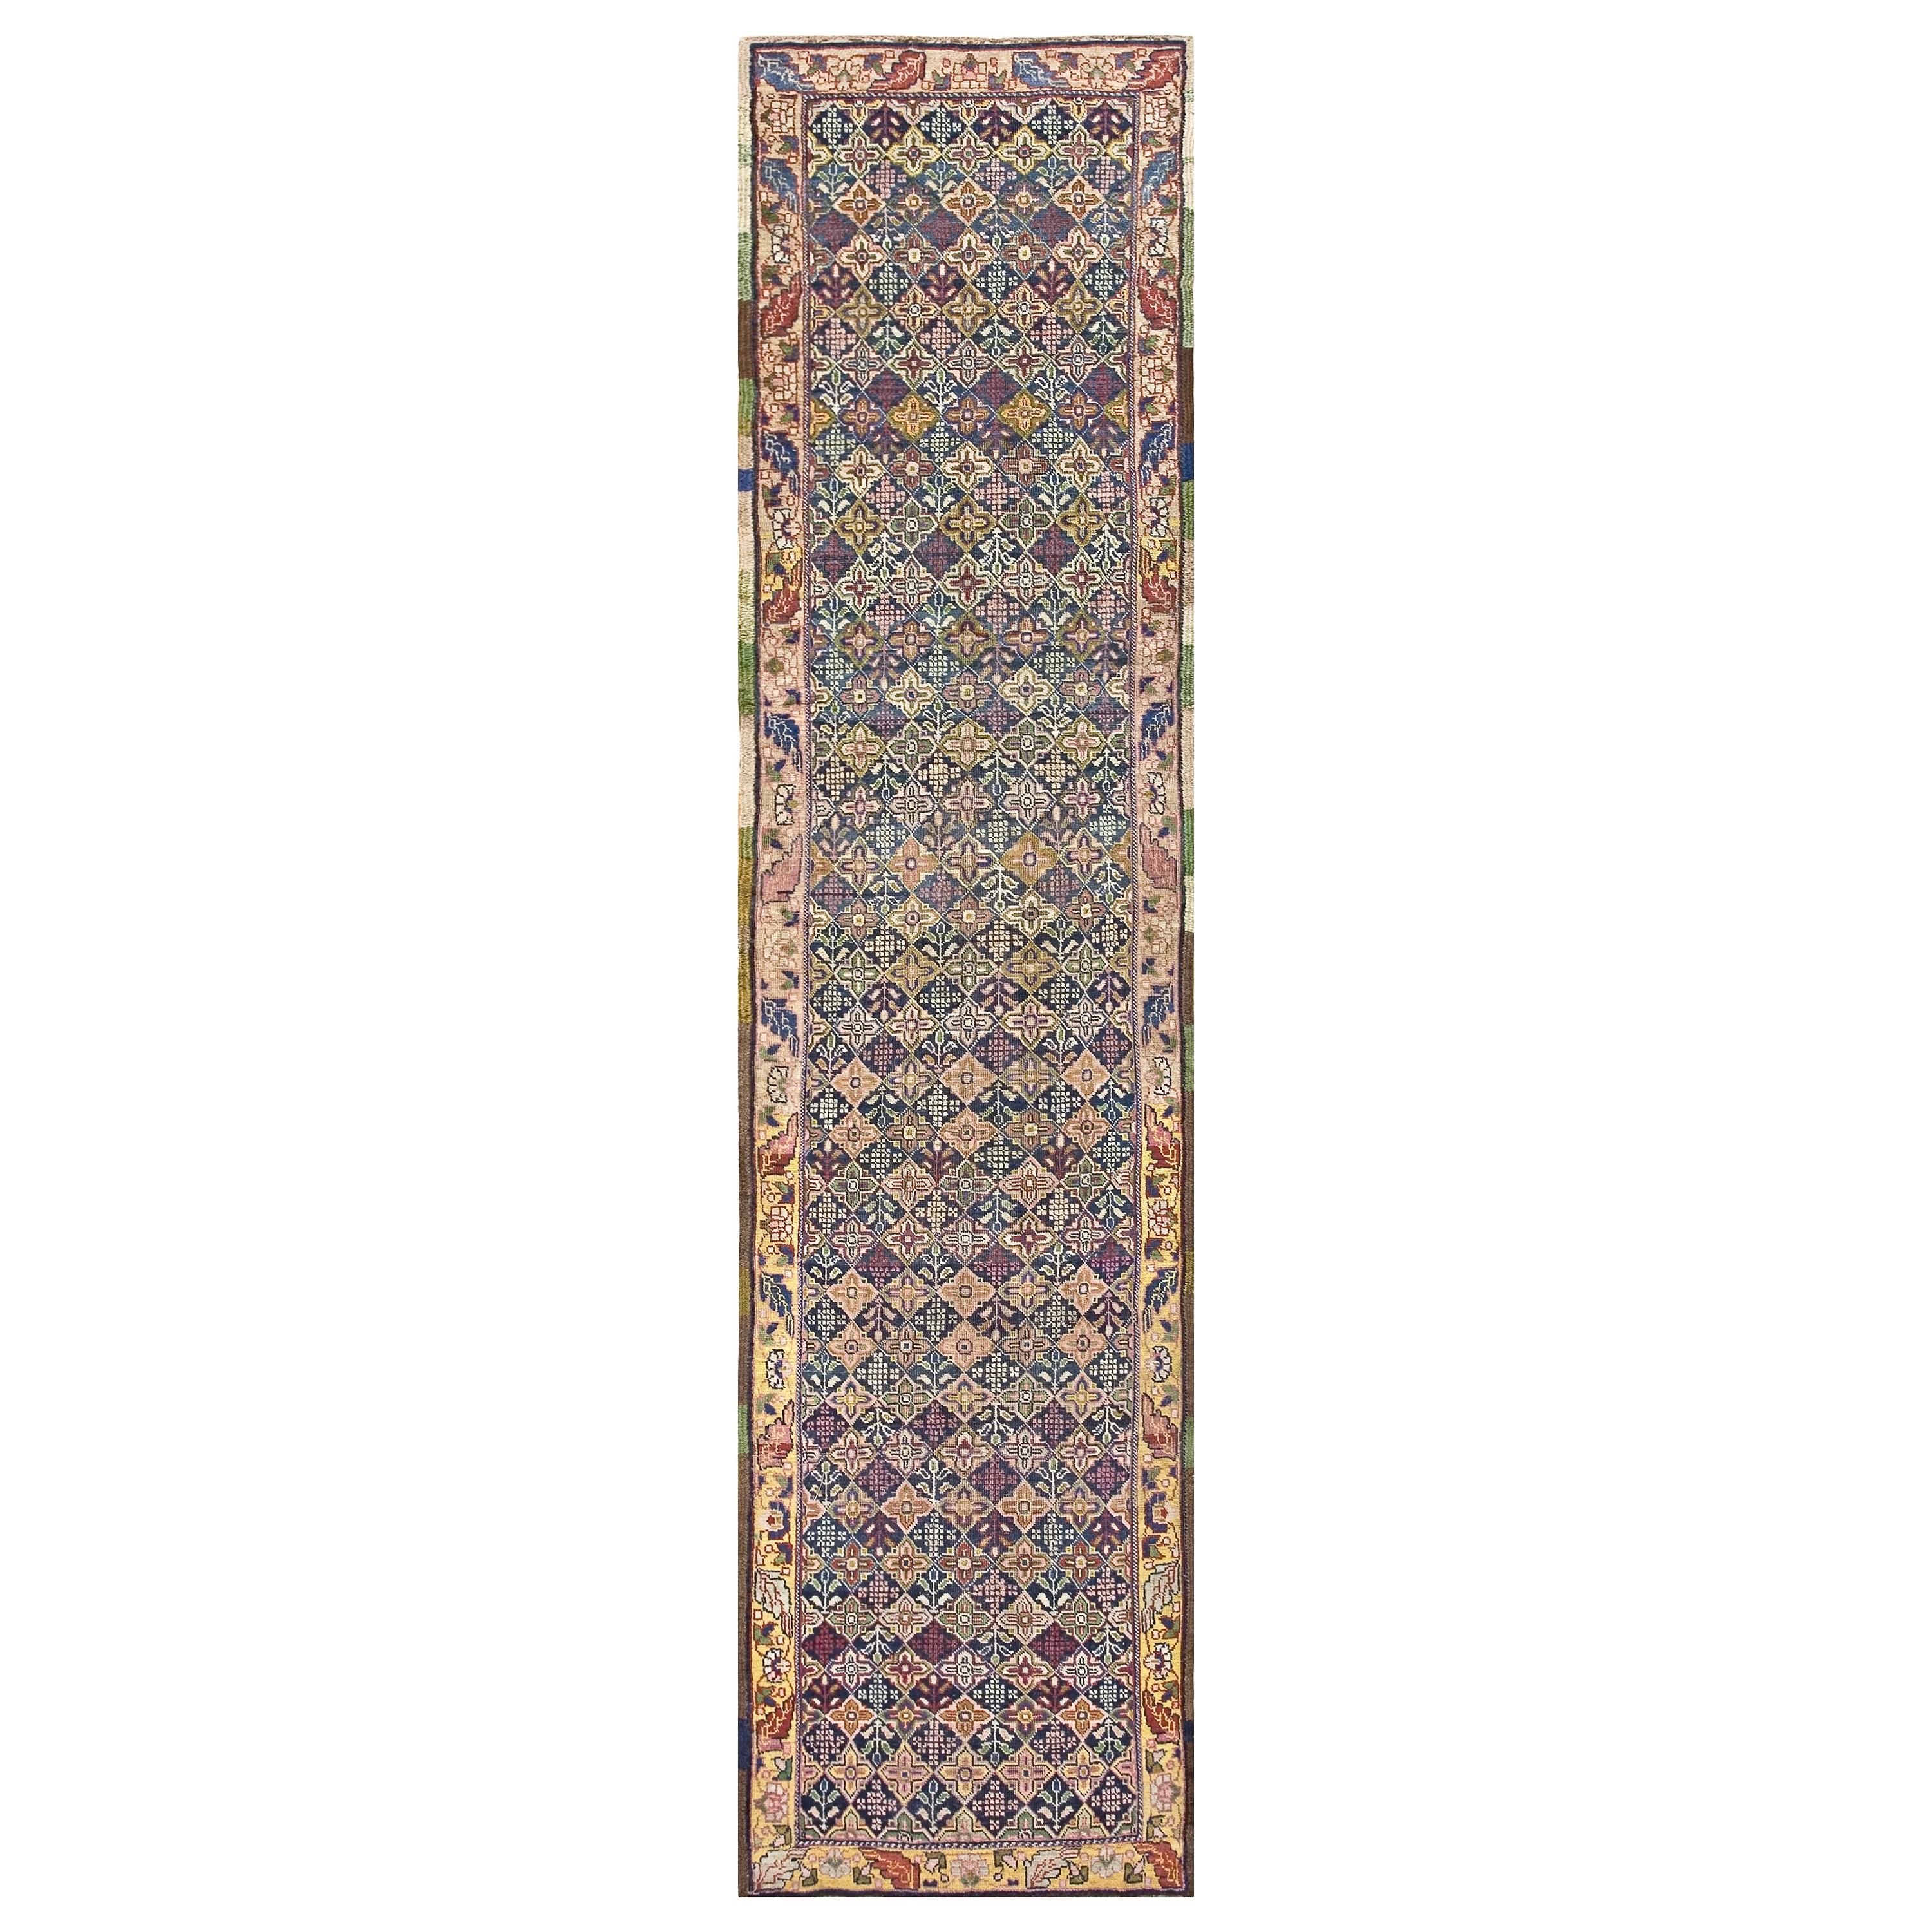 19th Century W. Persian Bijar Carpet ( 3'3" x 14'10" - 99 x 452 ) For Sale